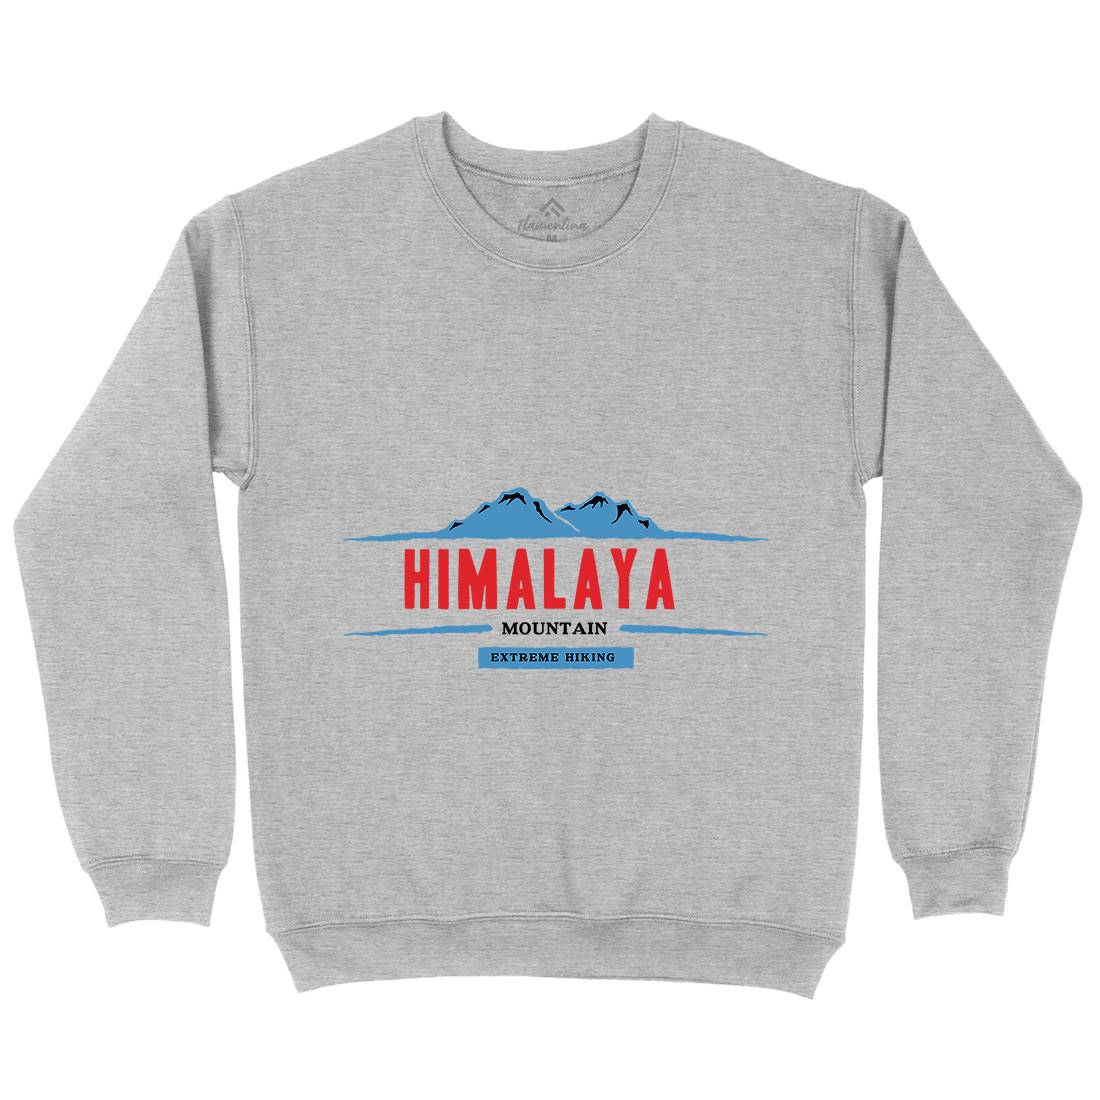 Himalaya Mountain Kids Crew Neck Sweatshirt Nature A329